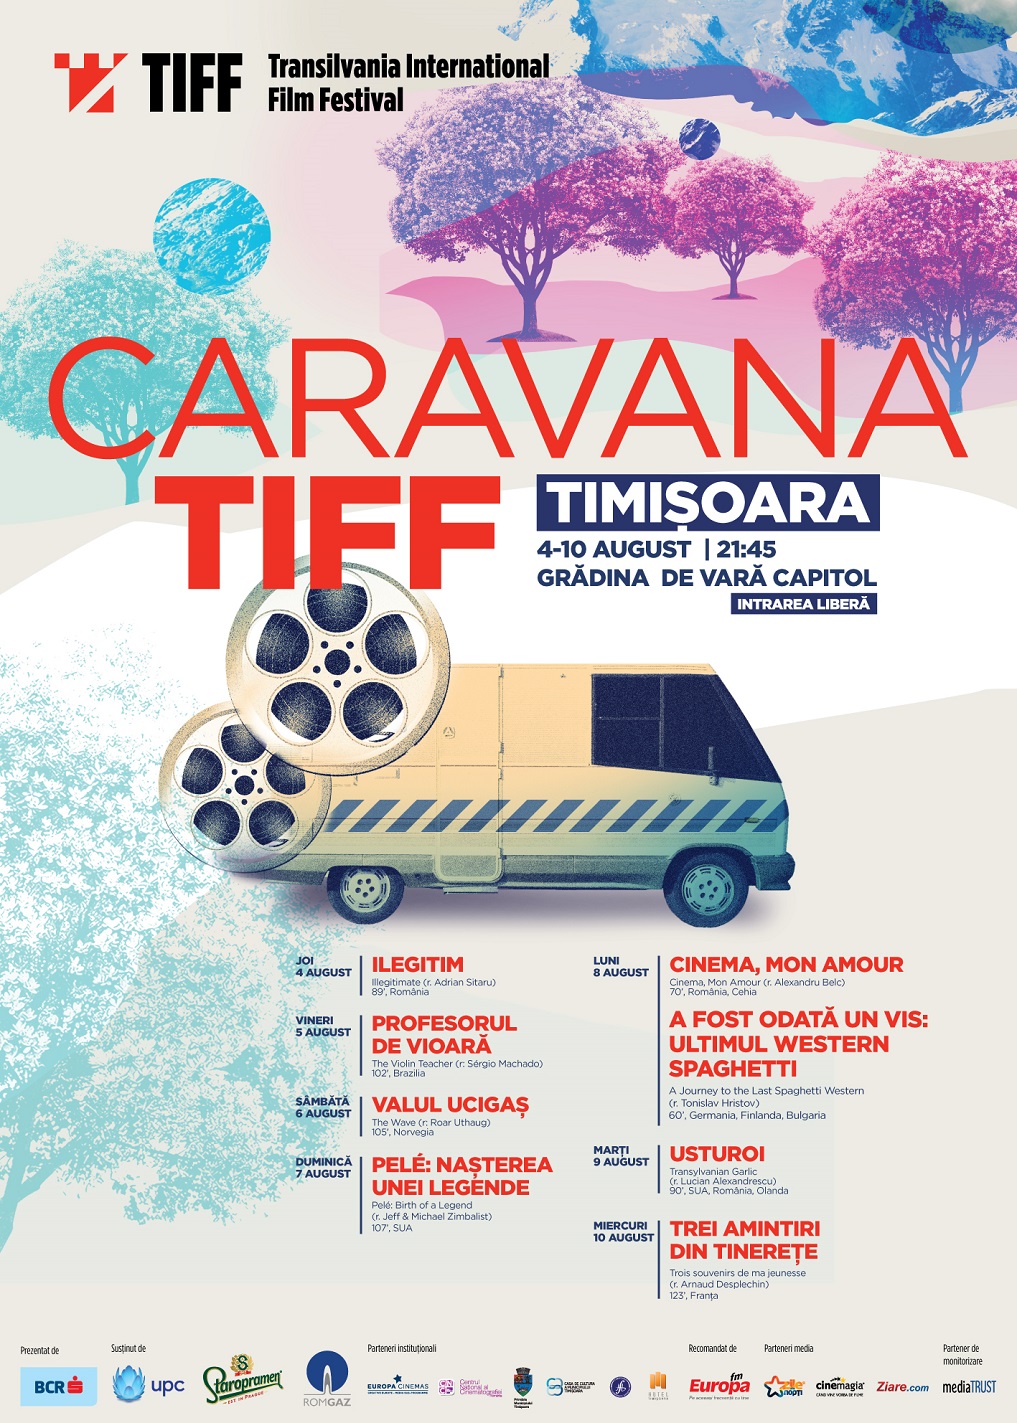 Timisoara_CARAVANA_TIFF_2016